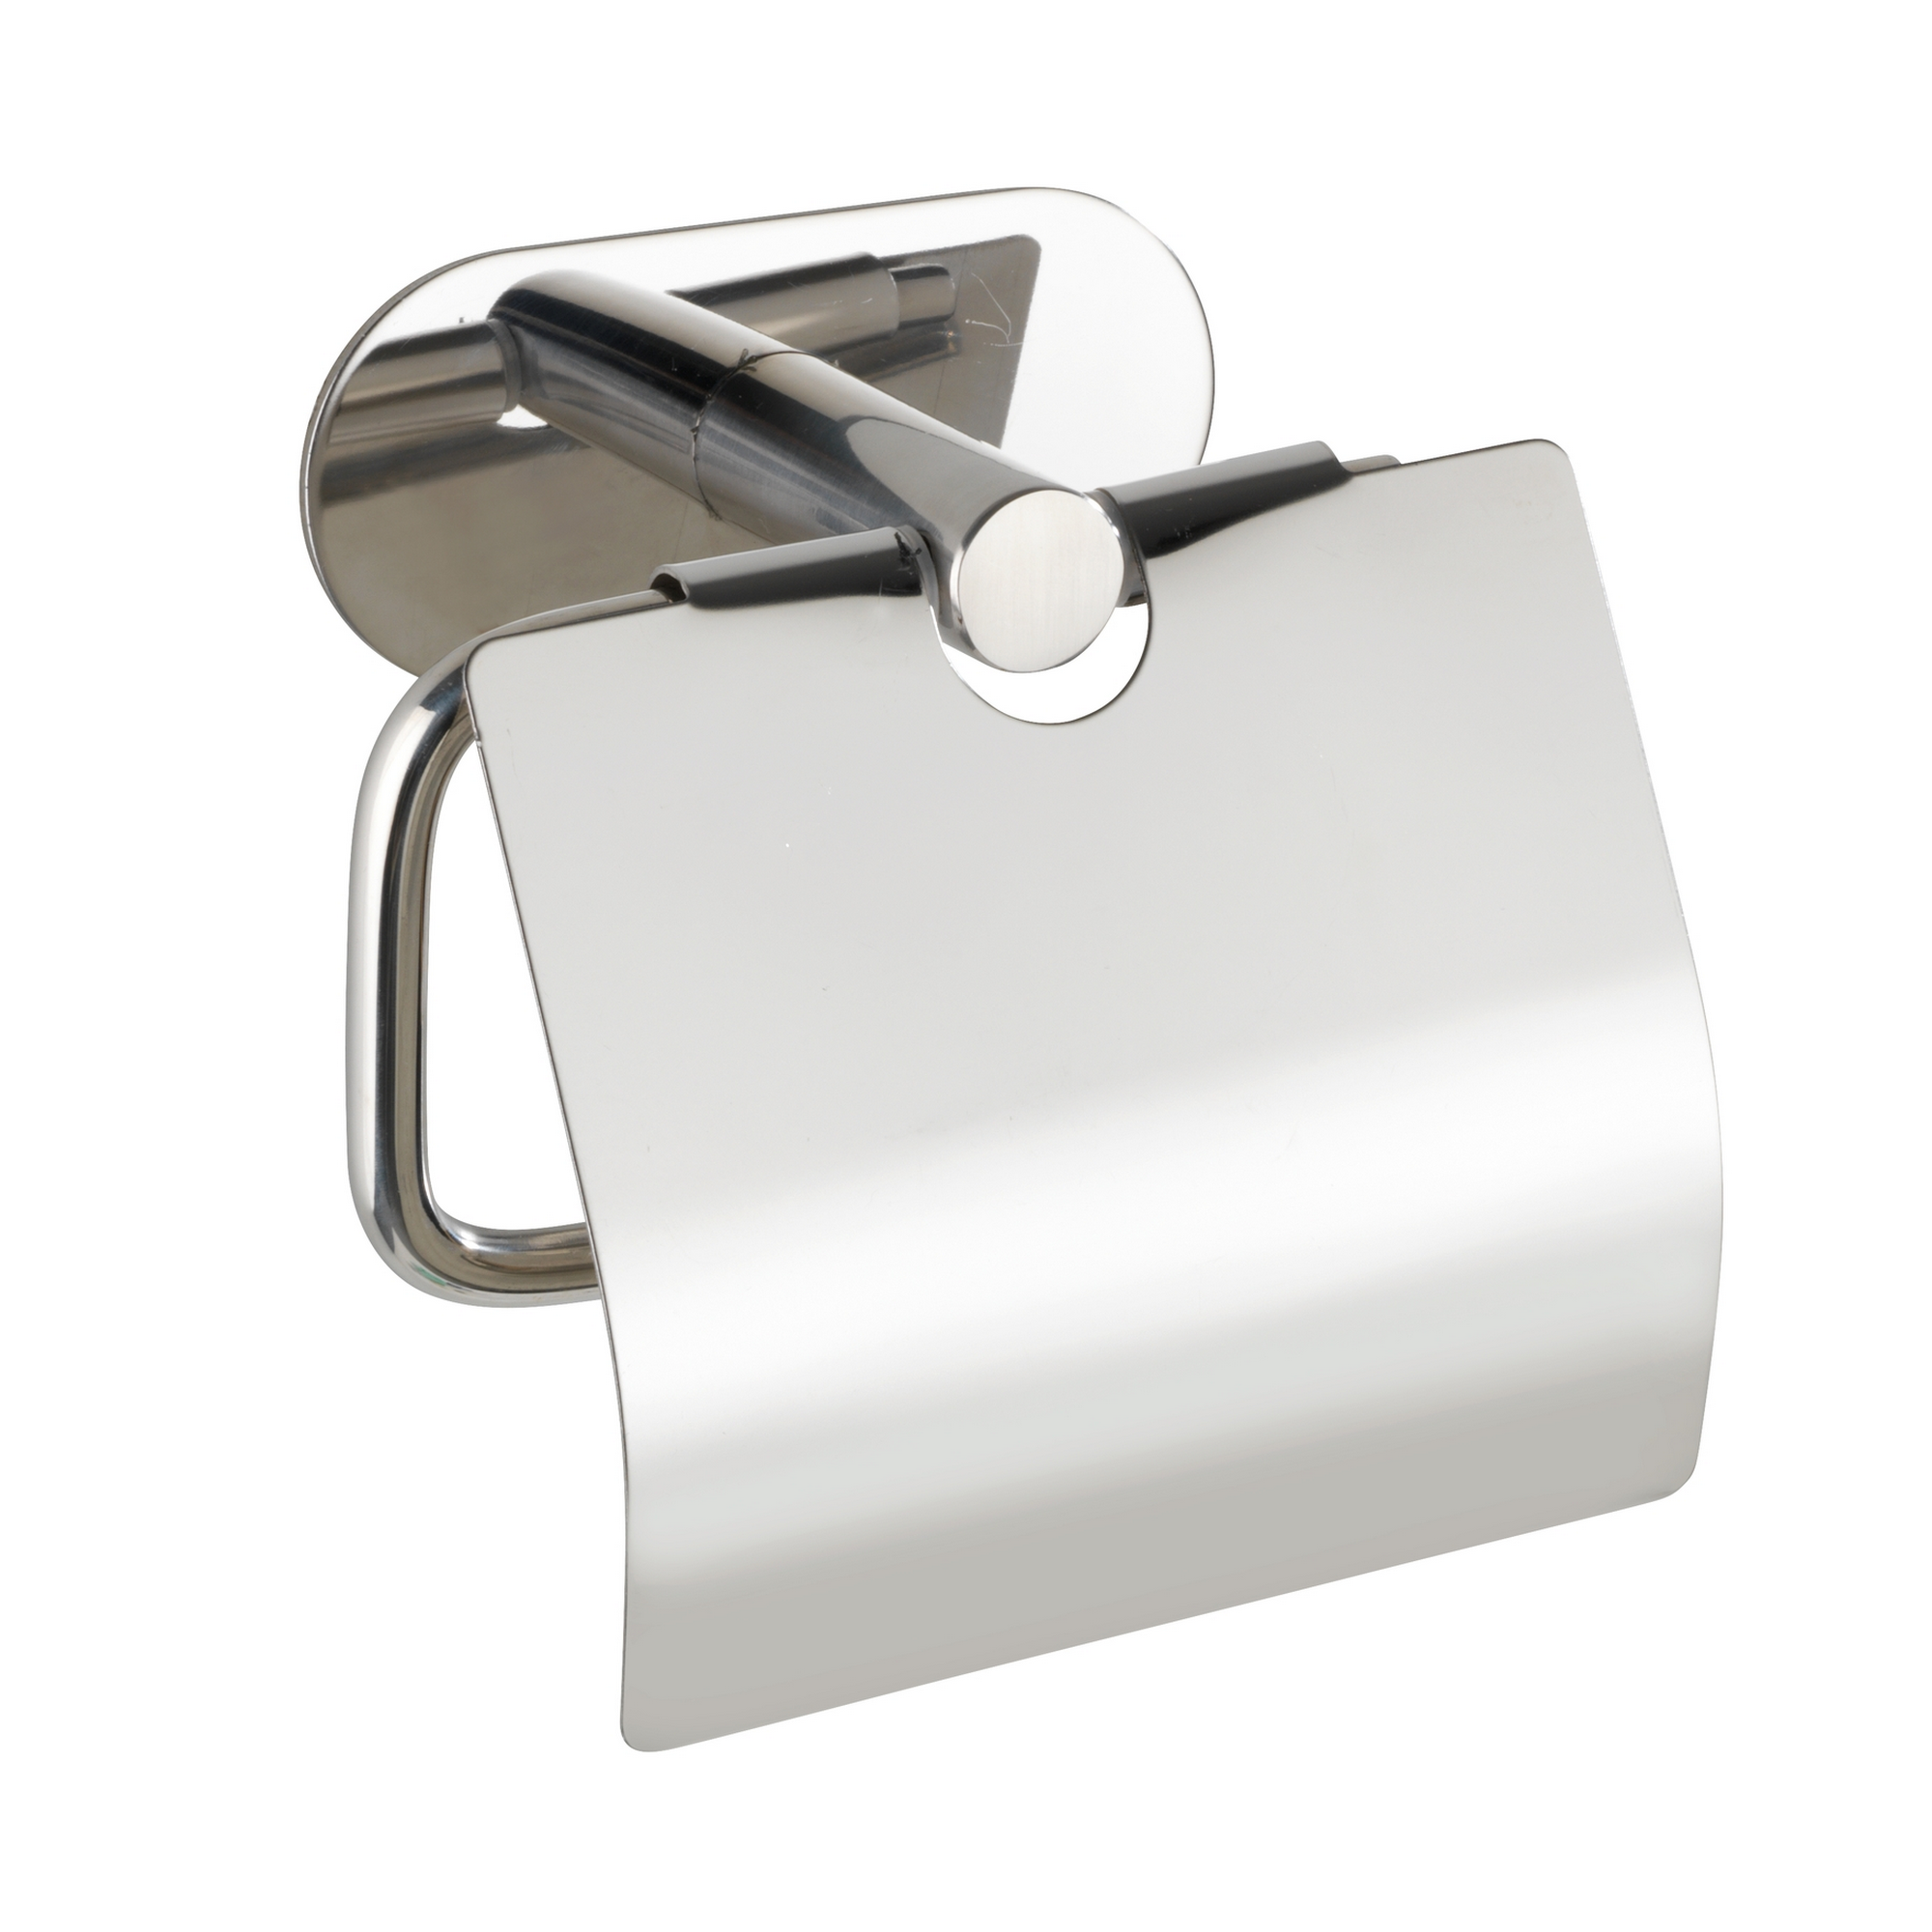 Toilettenpapierhalter 'Turbo-Loc Orea Shine' Edelstahl glänzend, mit Deckel + product picture